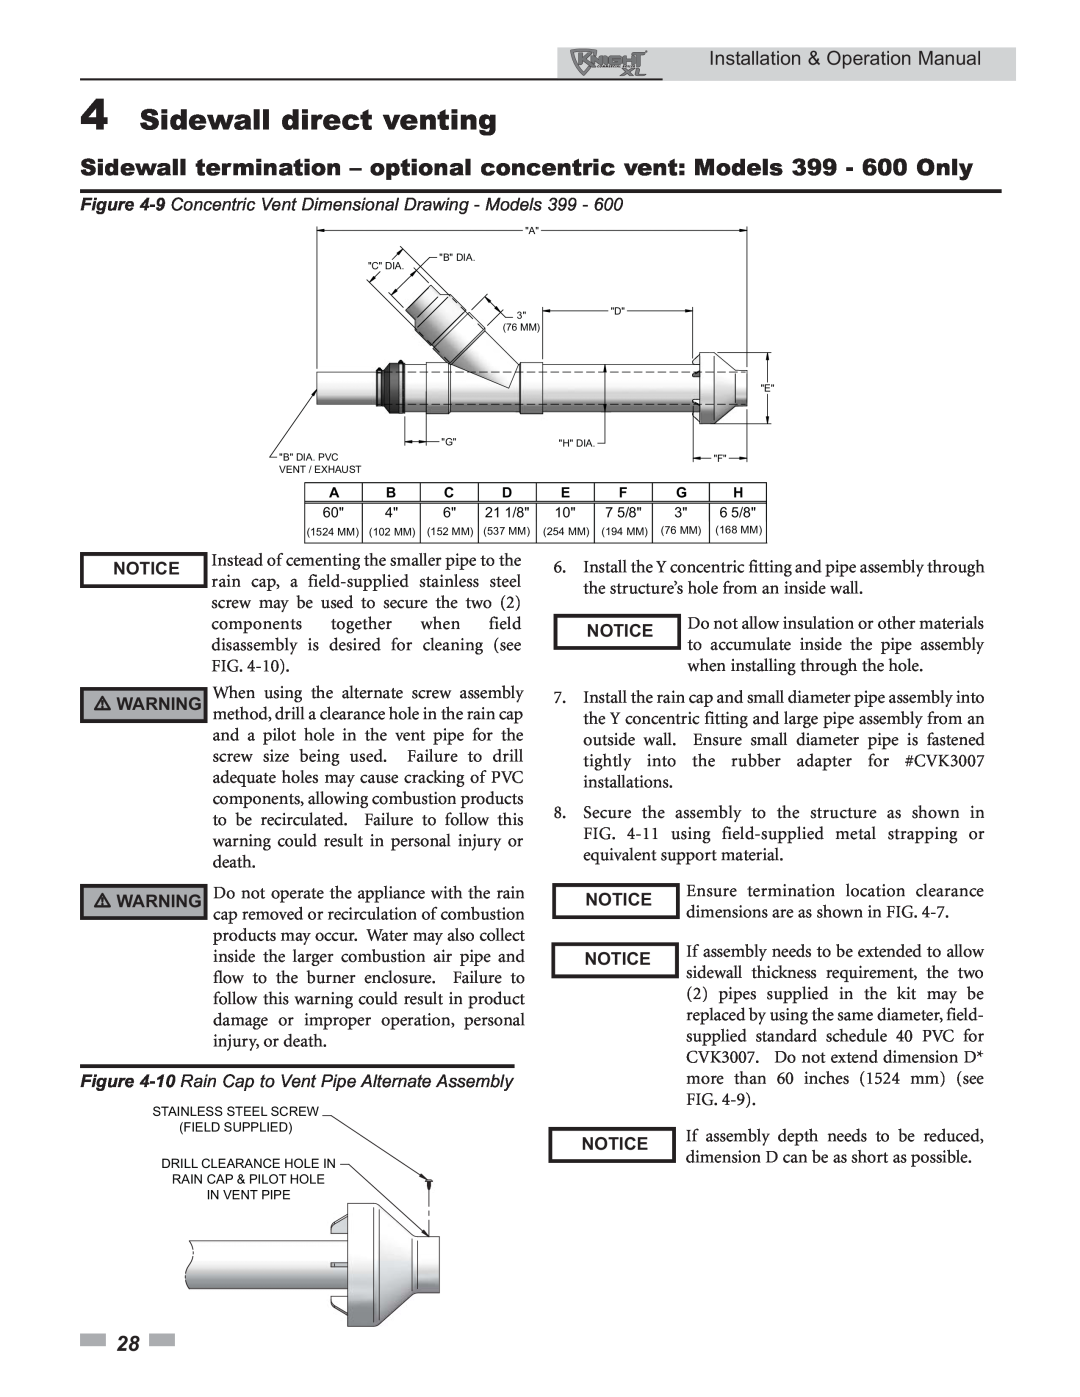 Lochinvar 399 operation manual 4Sidewall direct venting, Installation & Operation Manual, Notice 